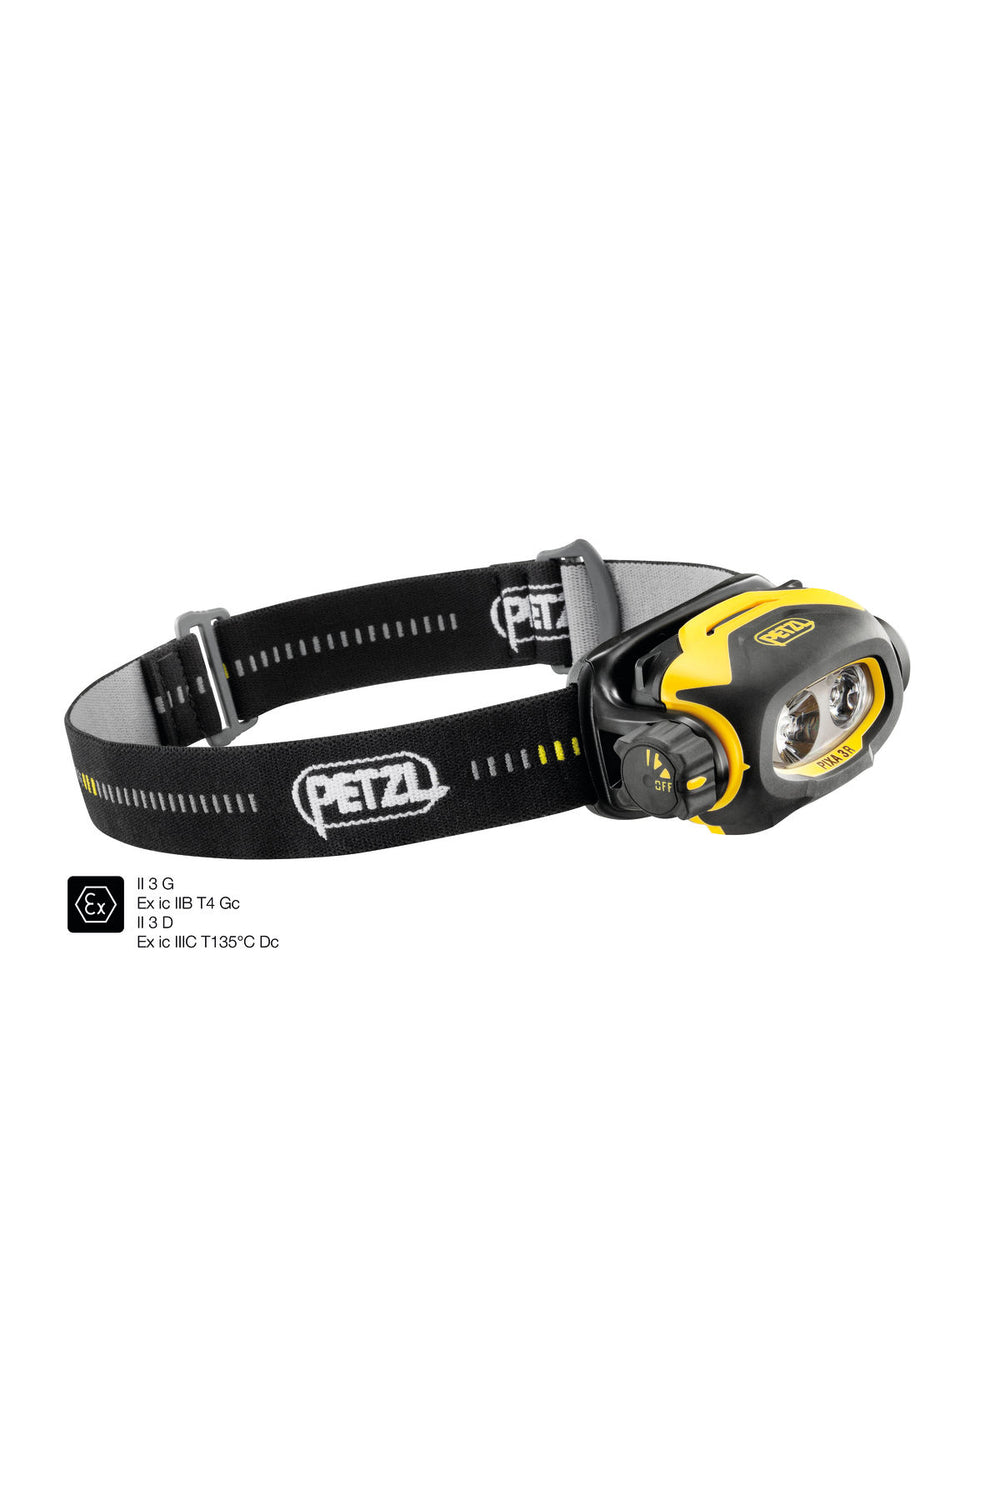 Petzl - Pixa 3R (UK VERSION)